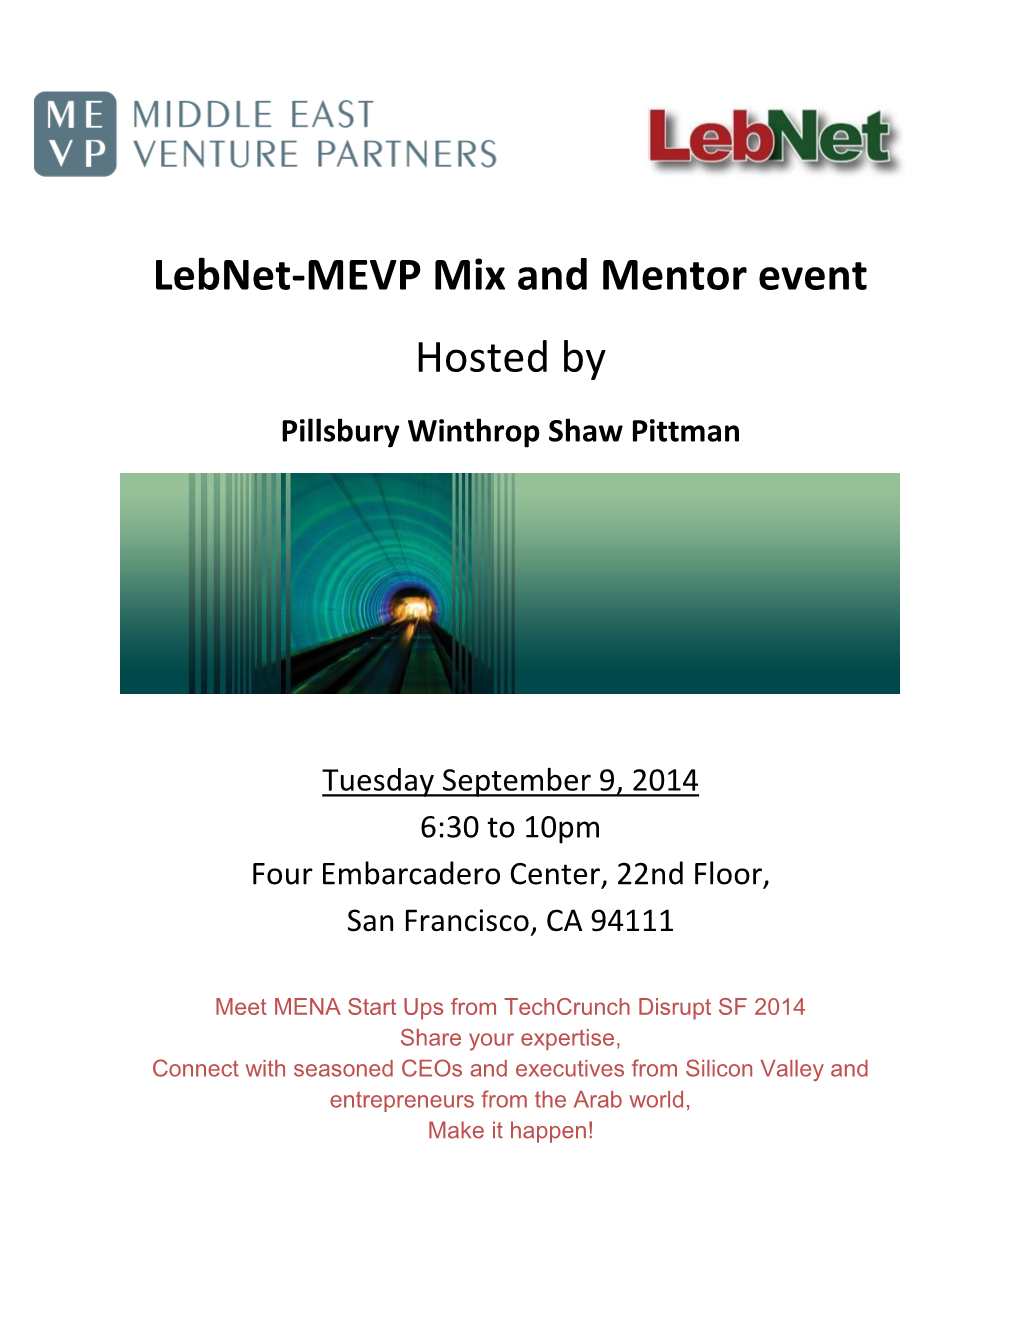 Lebnet-MEVP Mix and Mentor Event Hosted by Pillsbury Winthrop Shaw Pittman